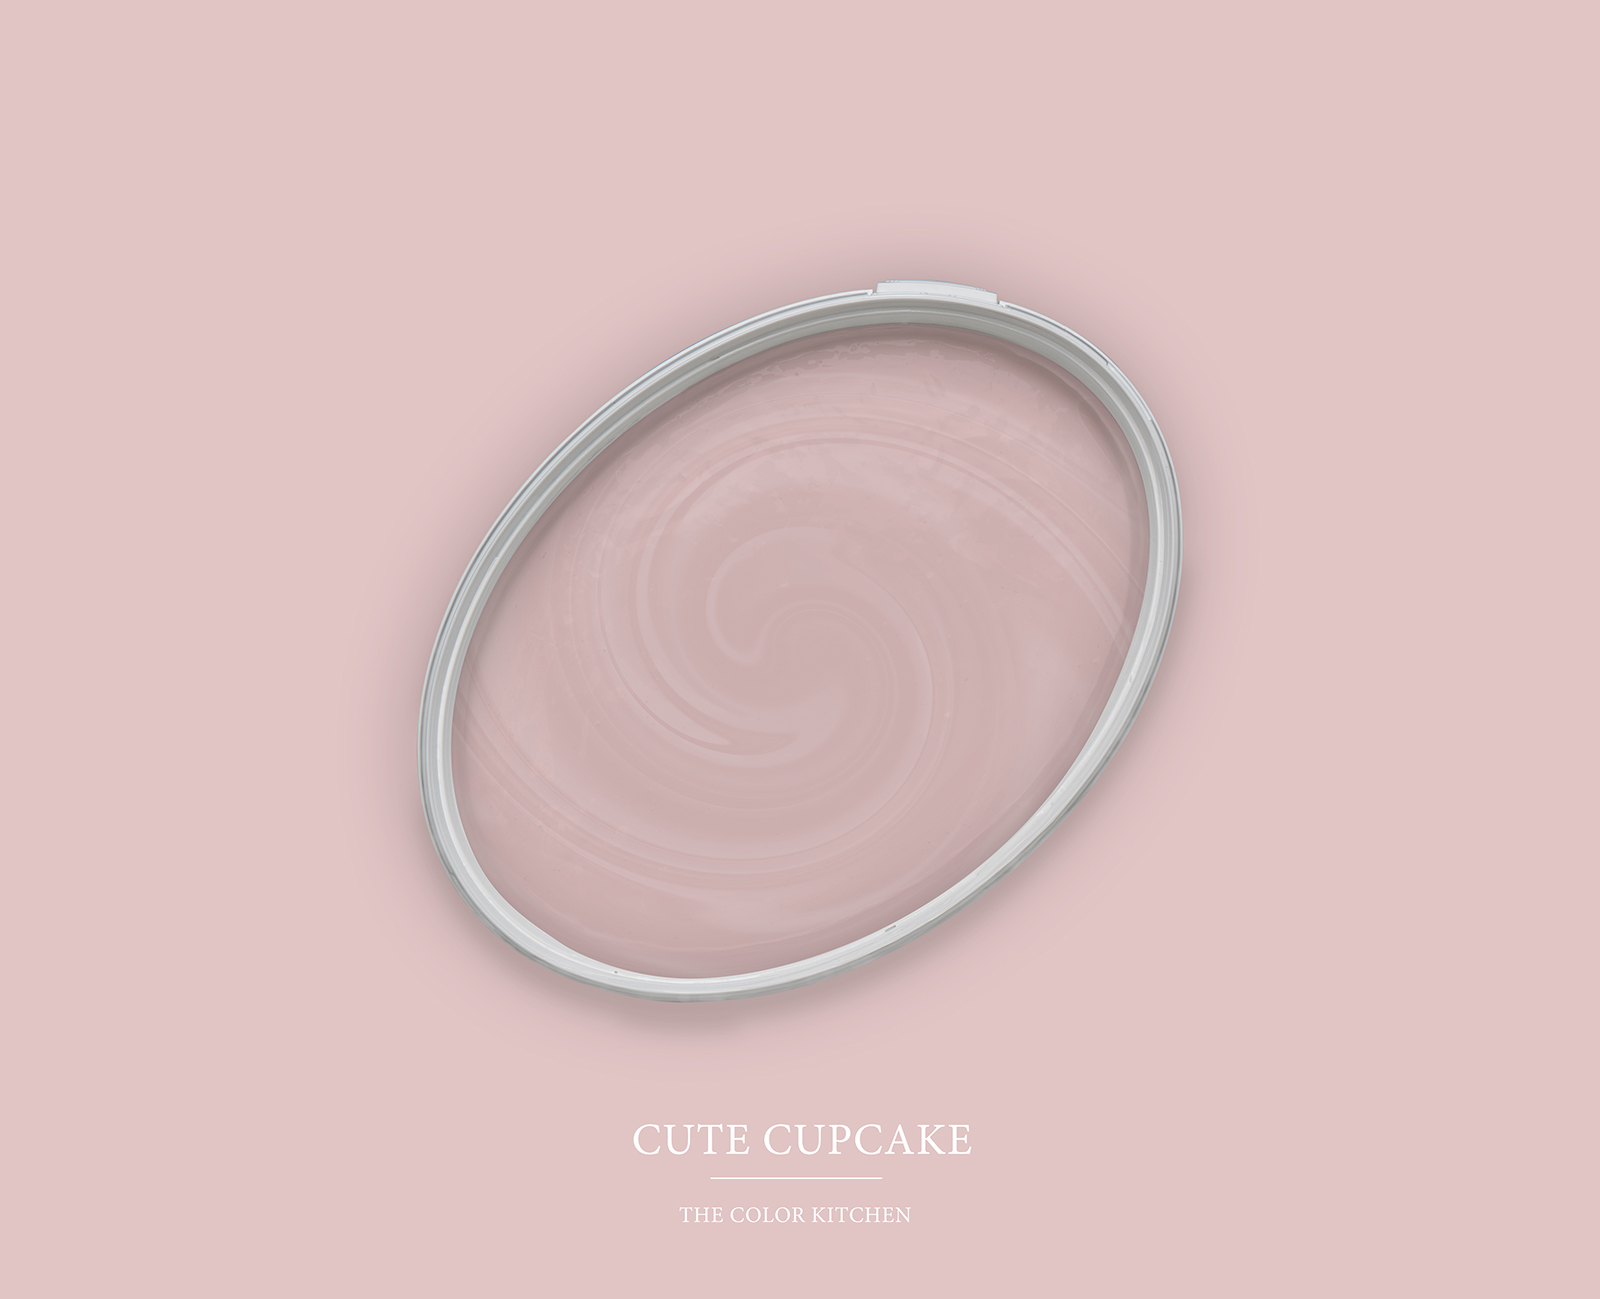 Muurverf TCK7008 »Cute Cupcake« in delicaat roze – 2,5 liter
